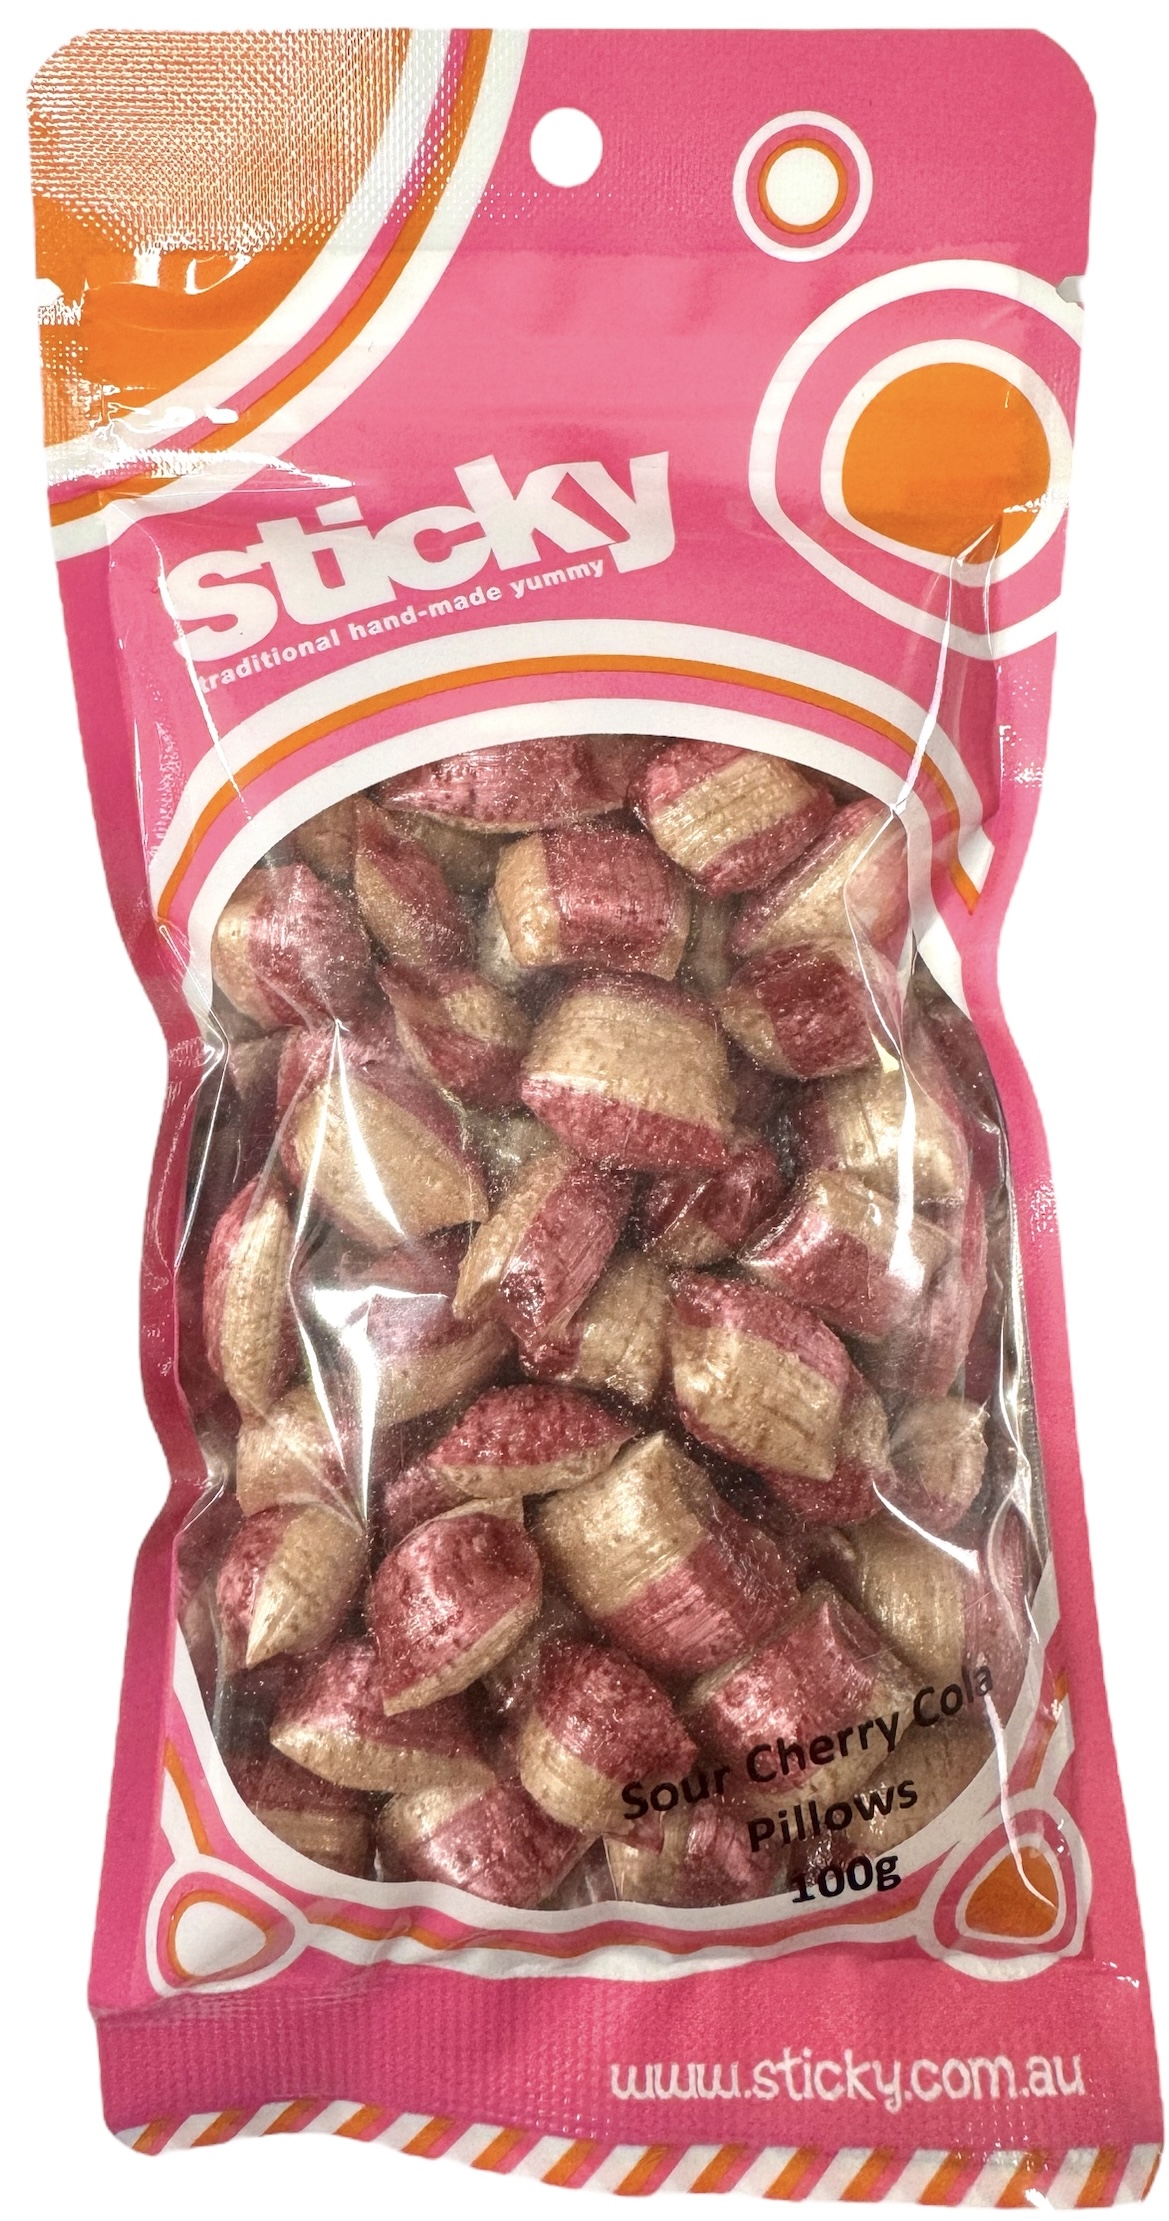 Sour Cherry Cola Pillows - 100g Retail Bag